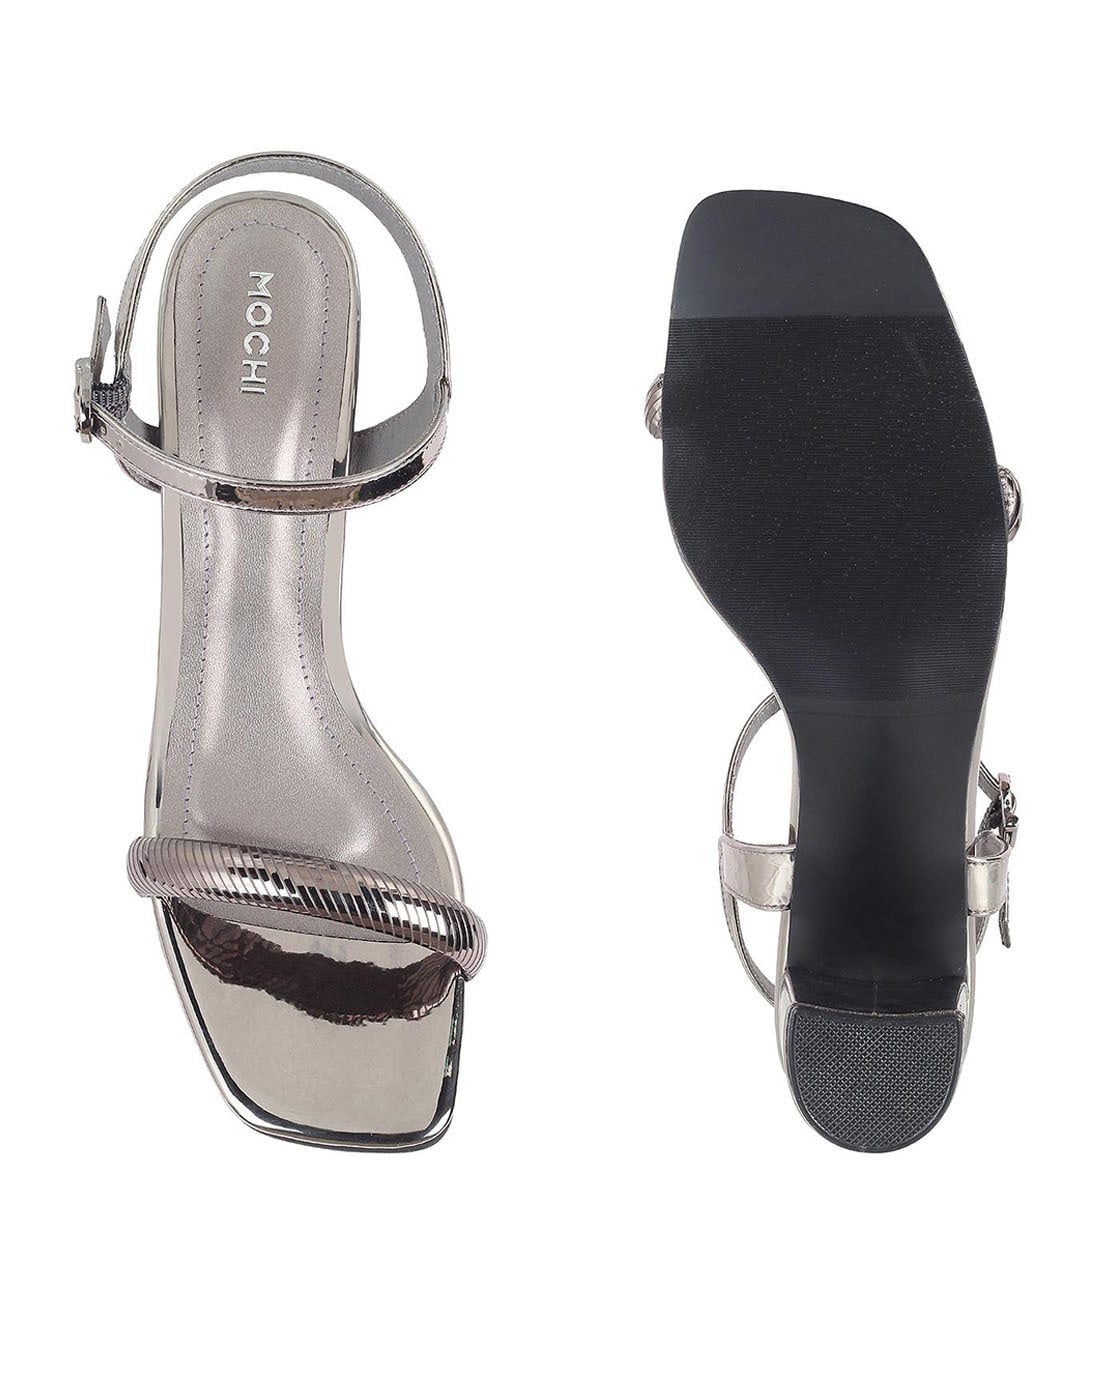 Mochi Womens Synthetic Black Sandals (Size (8 UK (41 EU)) : Amazon.in:  Shoes & Handbags